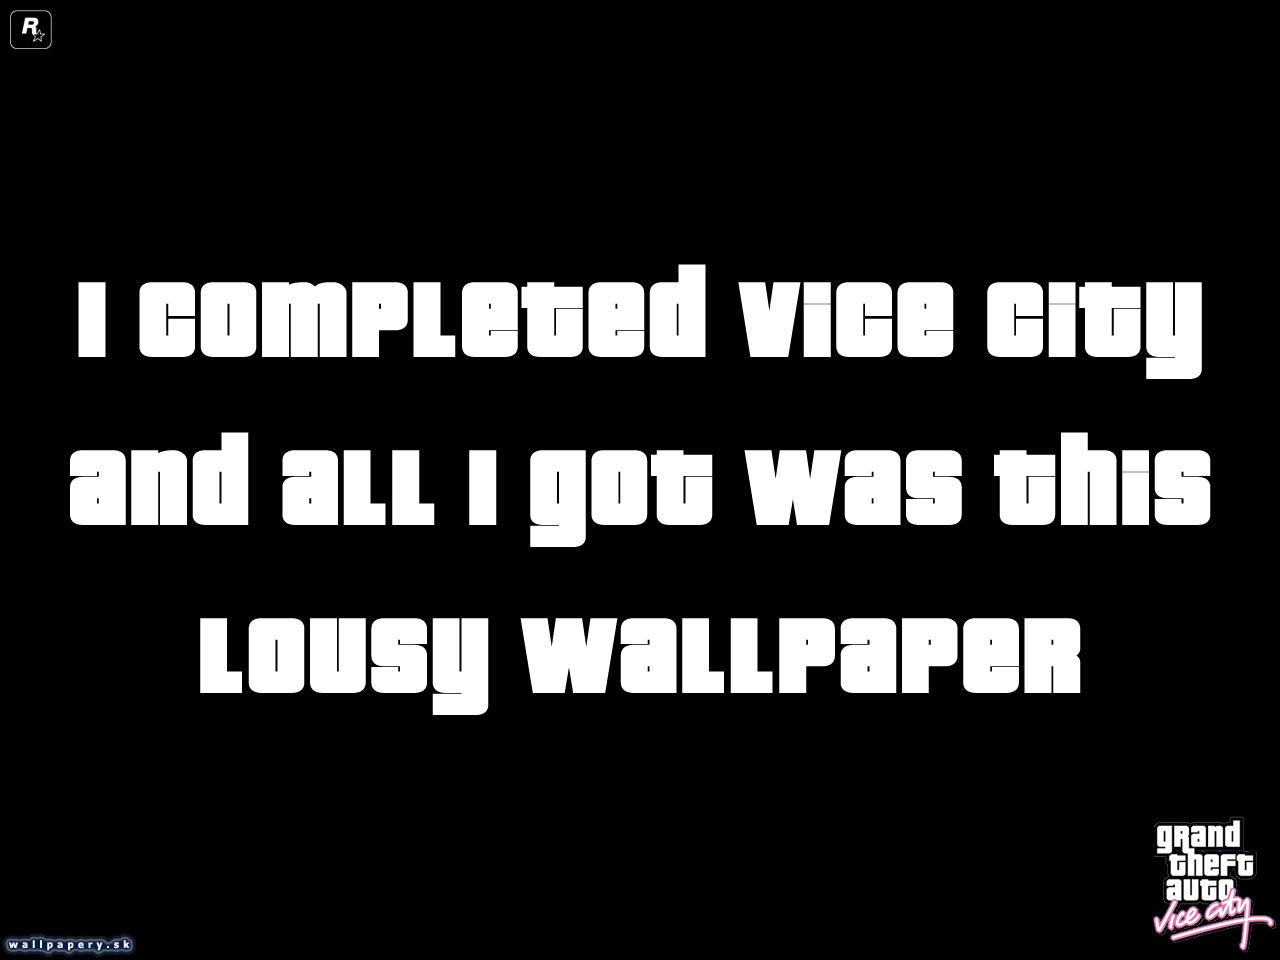 Grand Theft Auto: Vice City - wallpaper 25